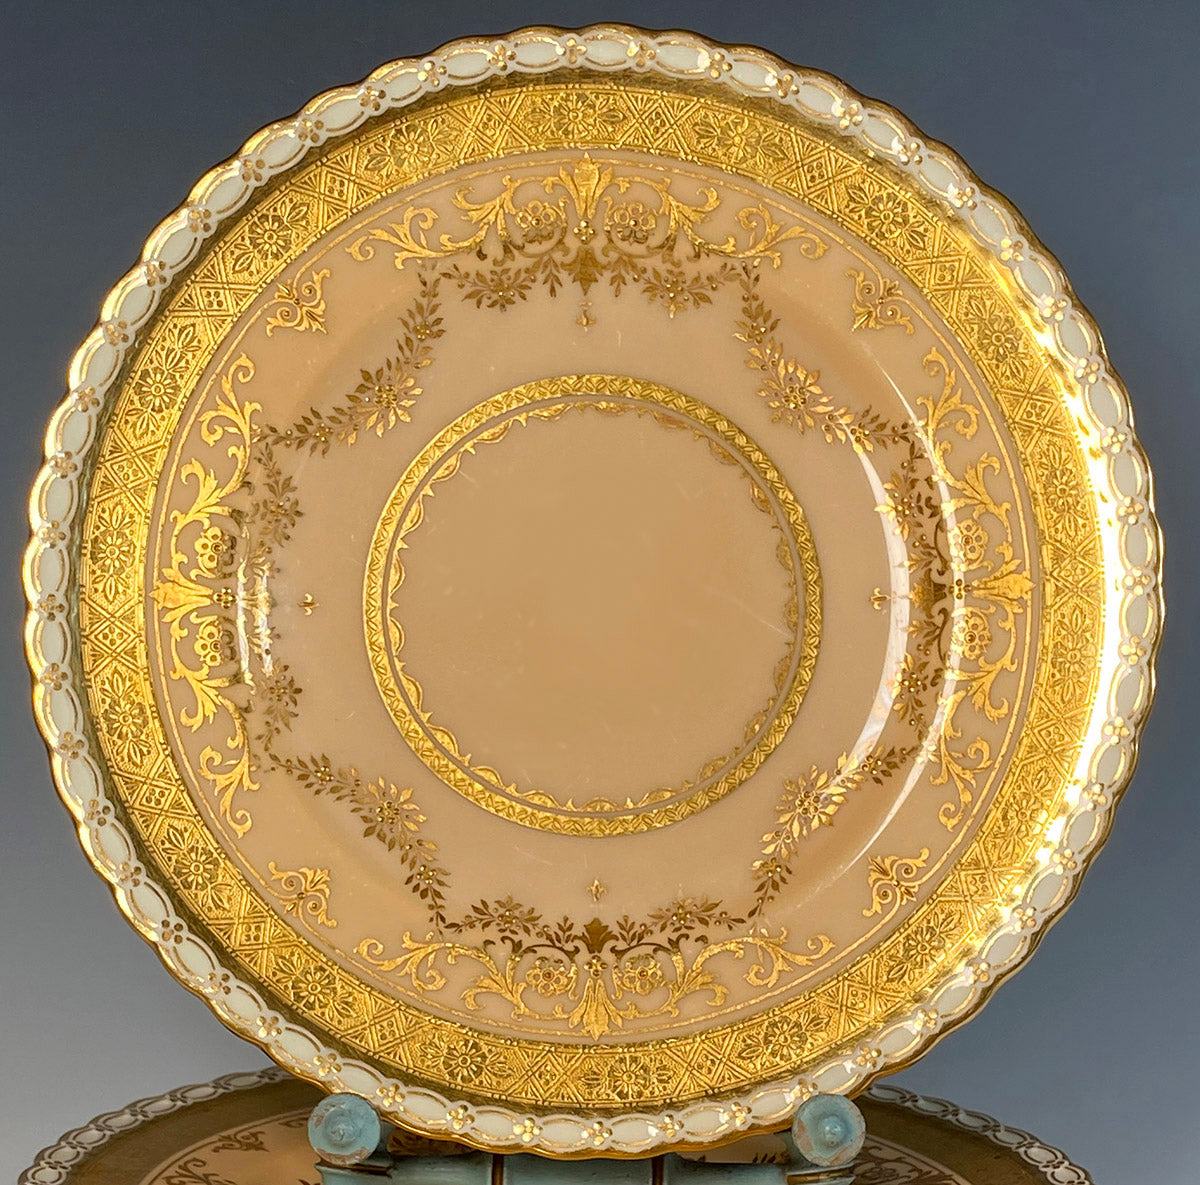 Antique Belle Epoch Raised Gold Enamel MINTON 9" Plates, Set of 14 Salad or Dessert Plates